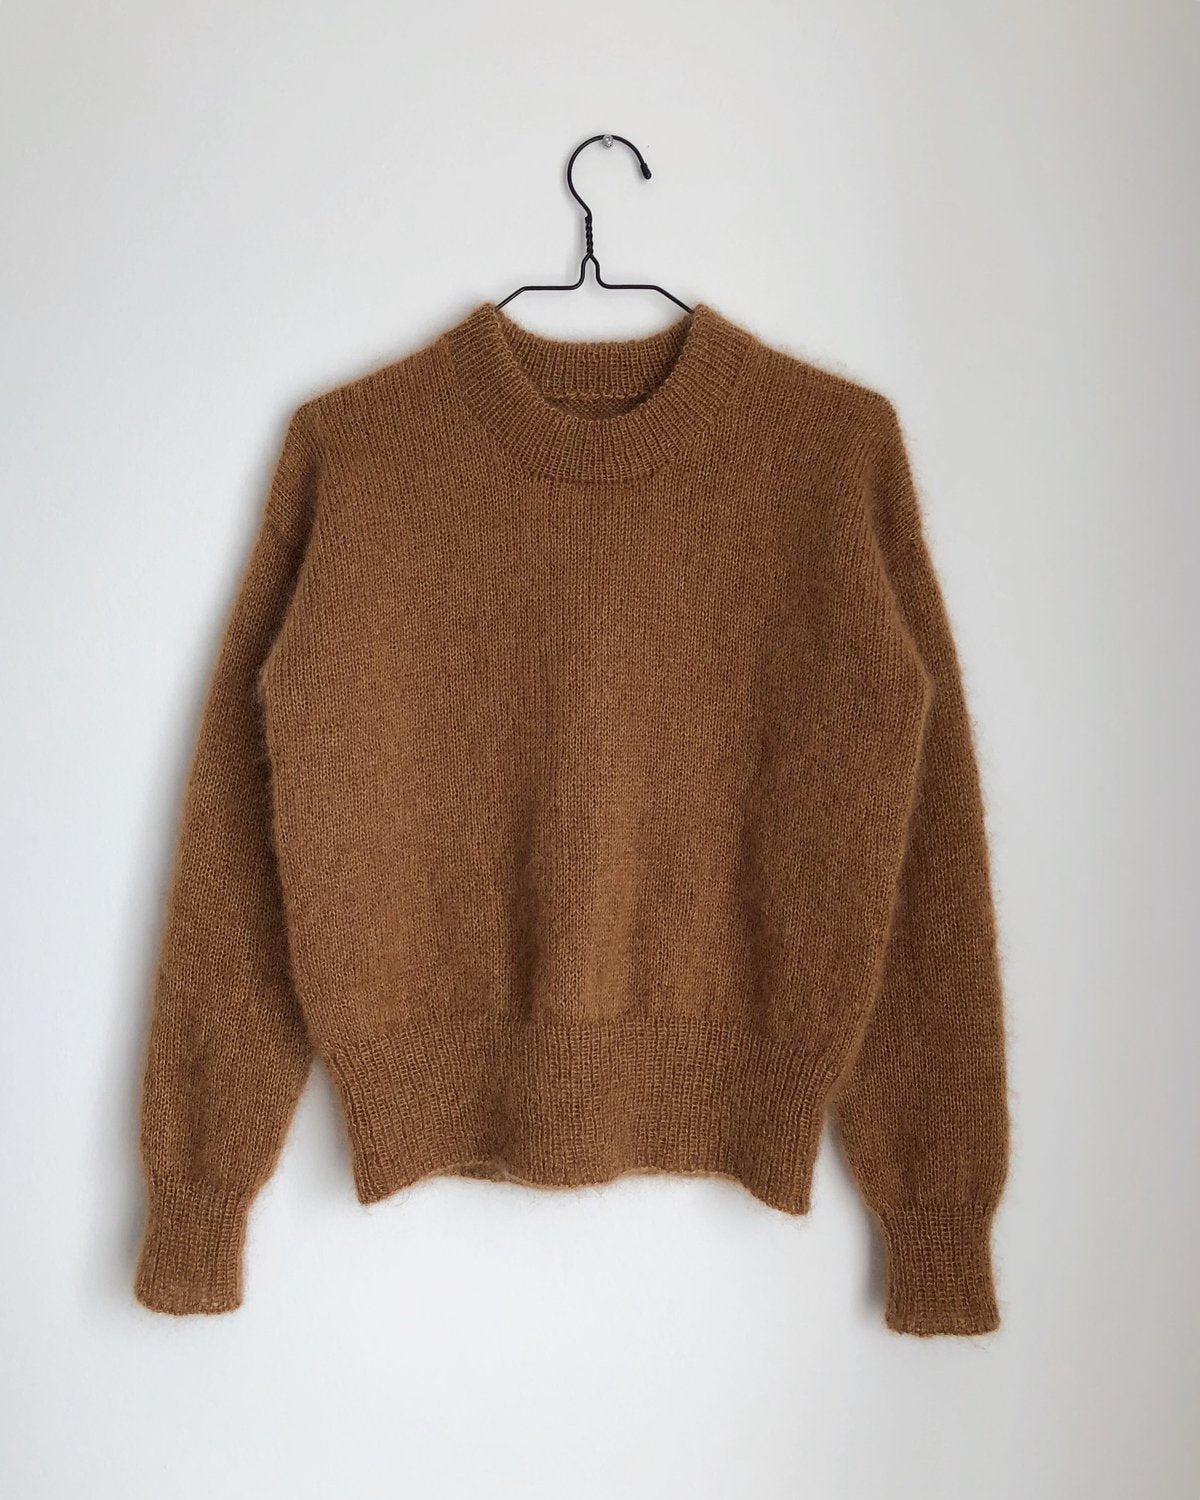 Stockholm Sweater PetiteKnit - Strikkekit Mohair